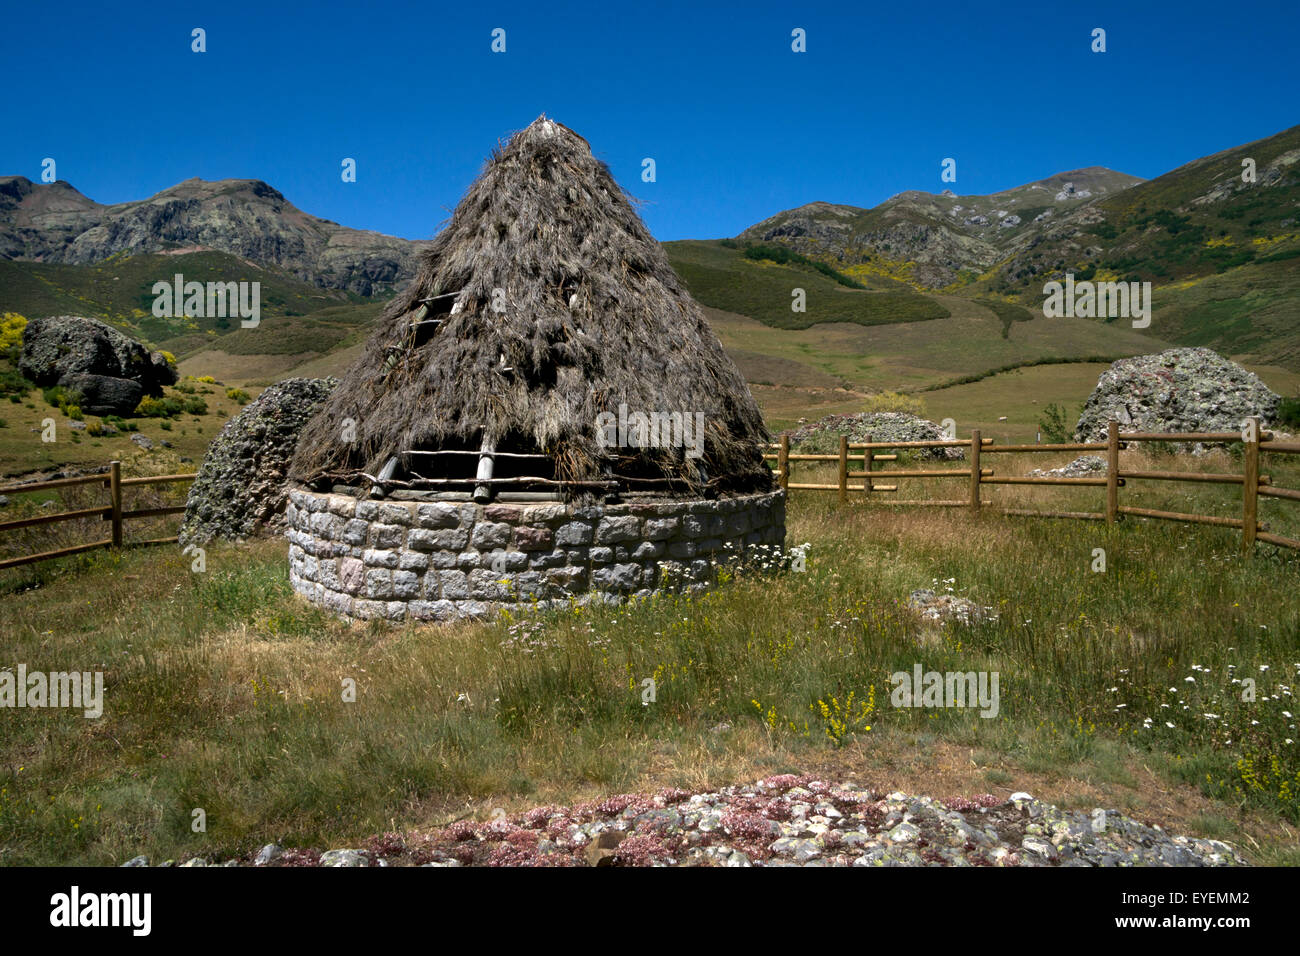 Altes Heu speichert in hohen Bergen Pics de Europa, Asturien, Nordspanien Stockfoto